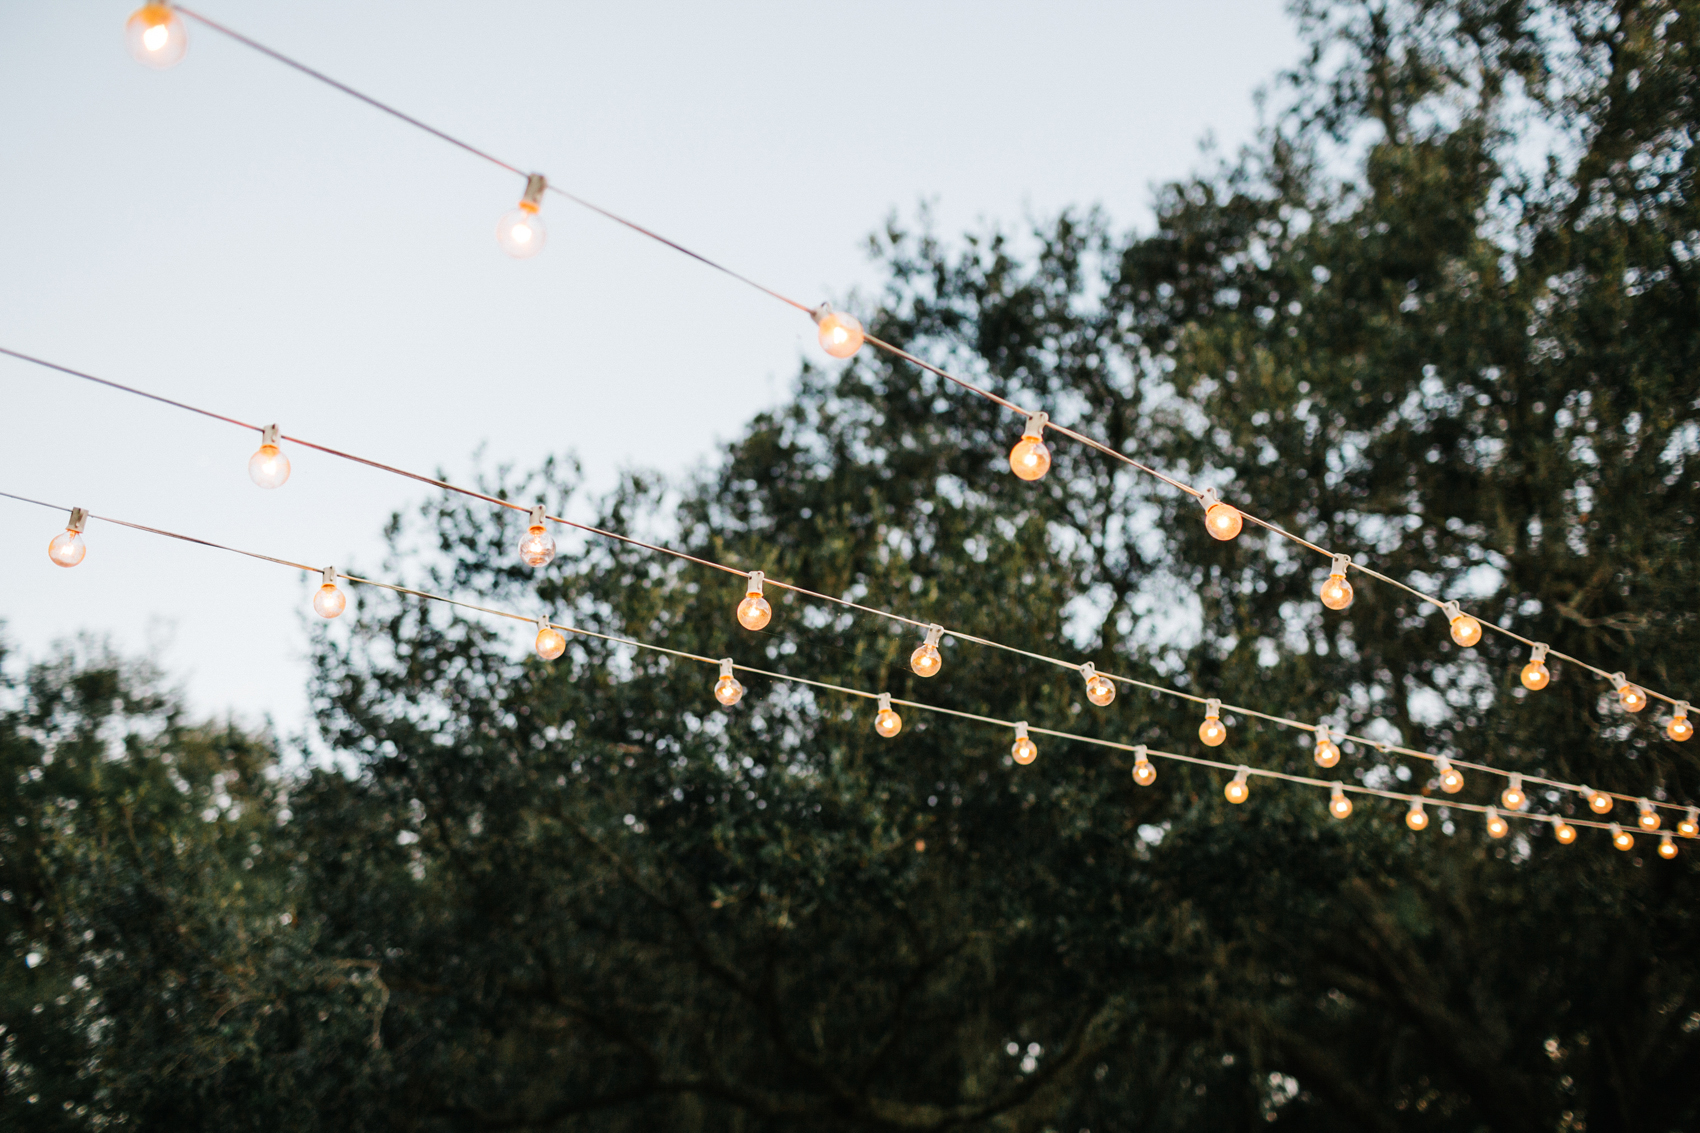 stringlights at an outdoor farm wedding reception